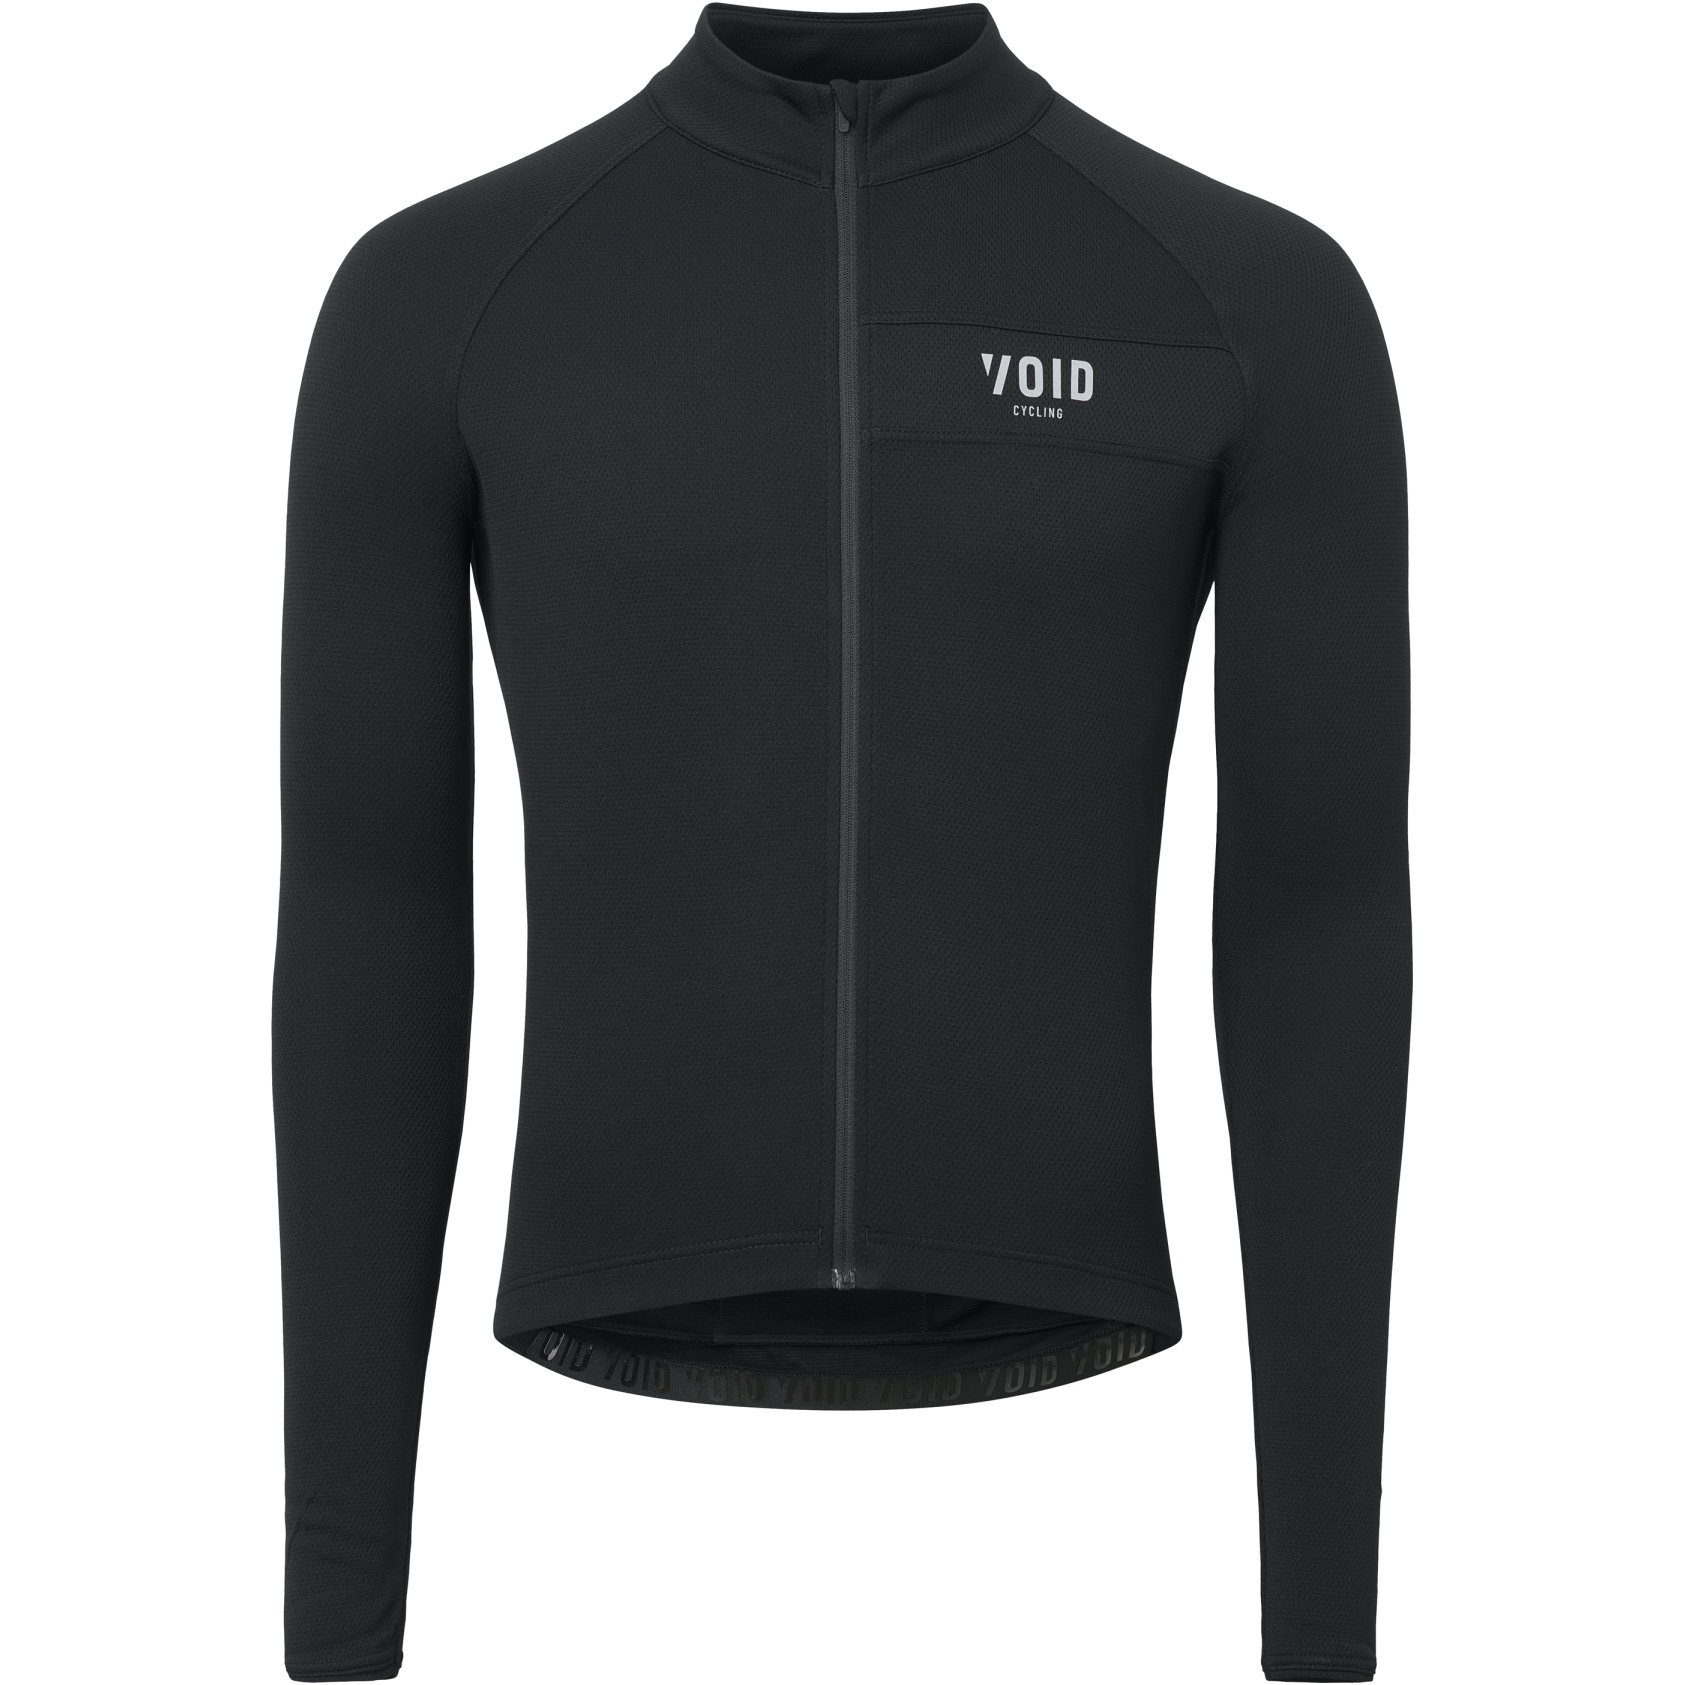 Productfoto van VOID Cycling Merino Long Sleeve Jersey - Black